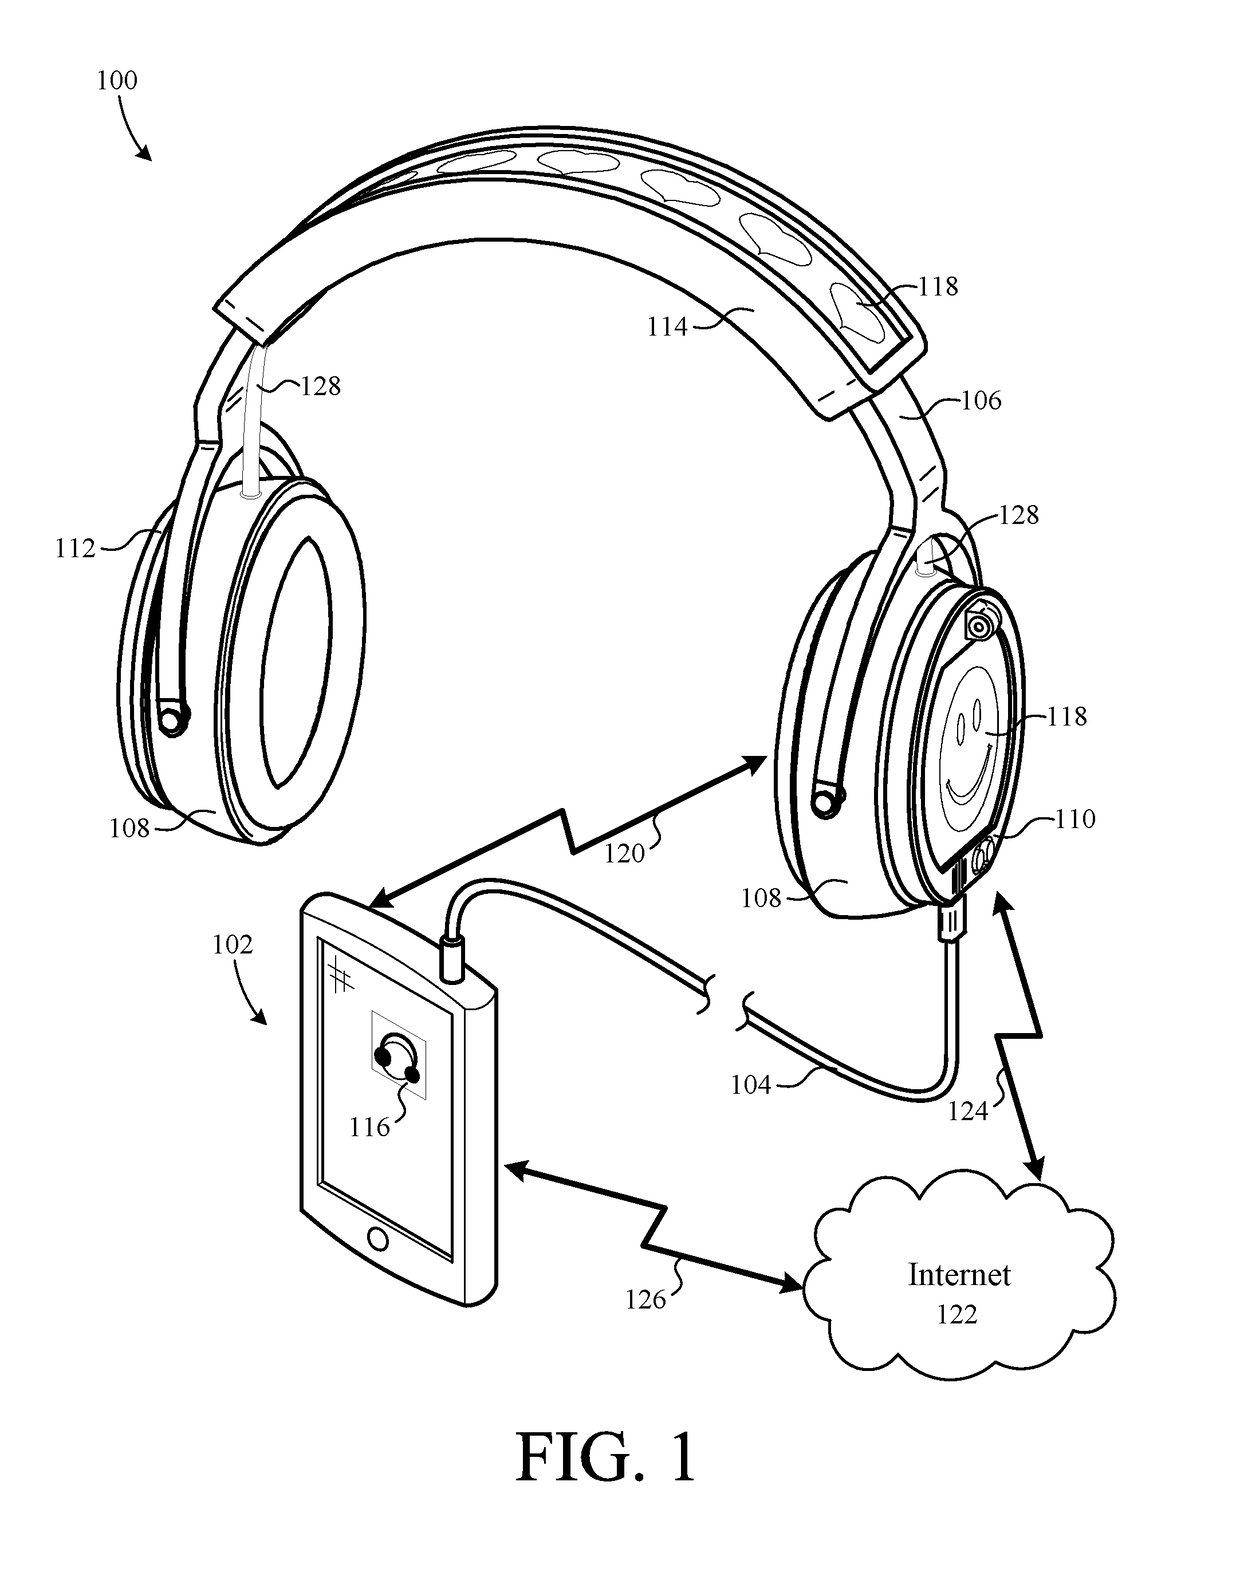 Headphones With Interactive Display